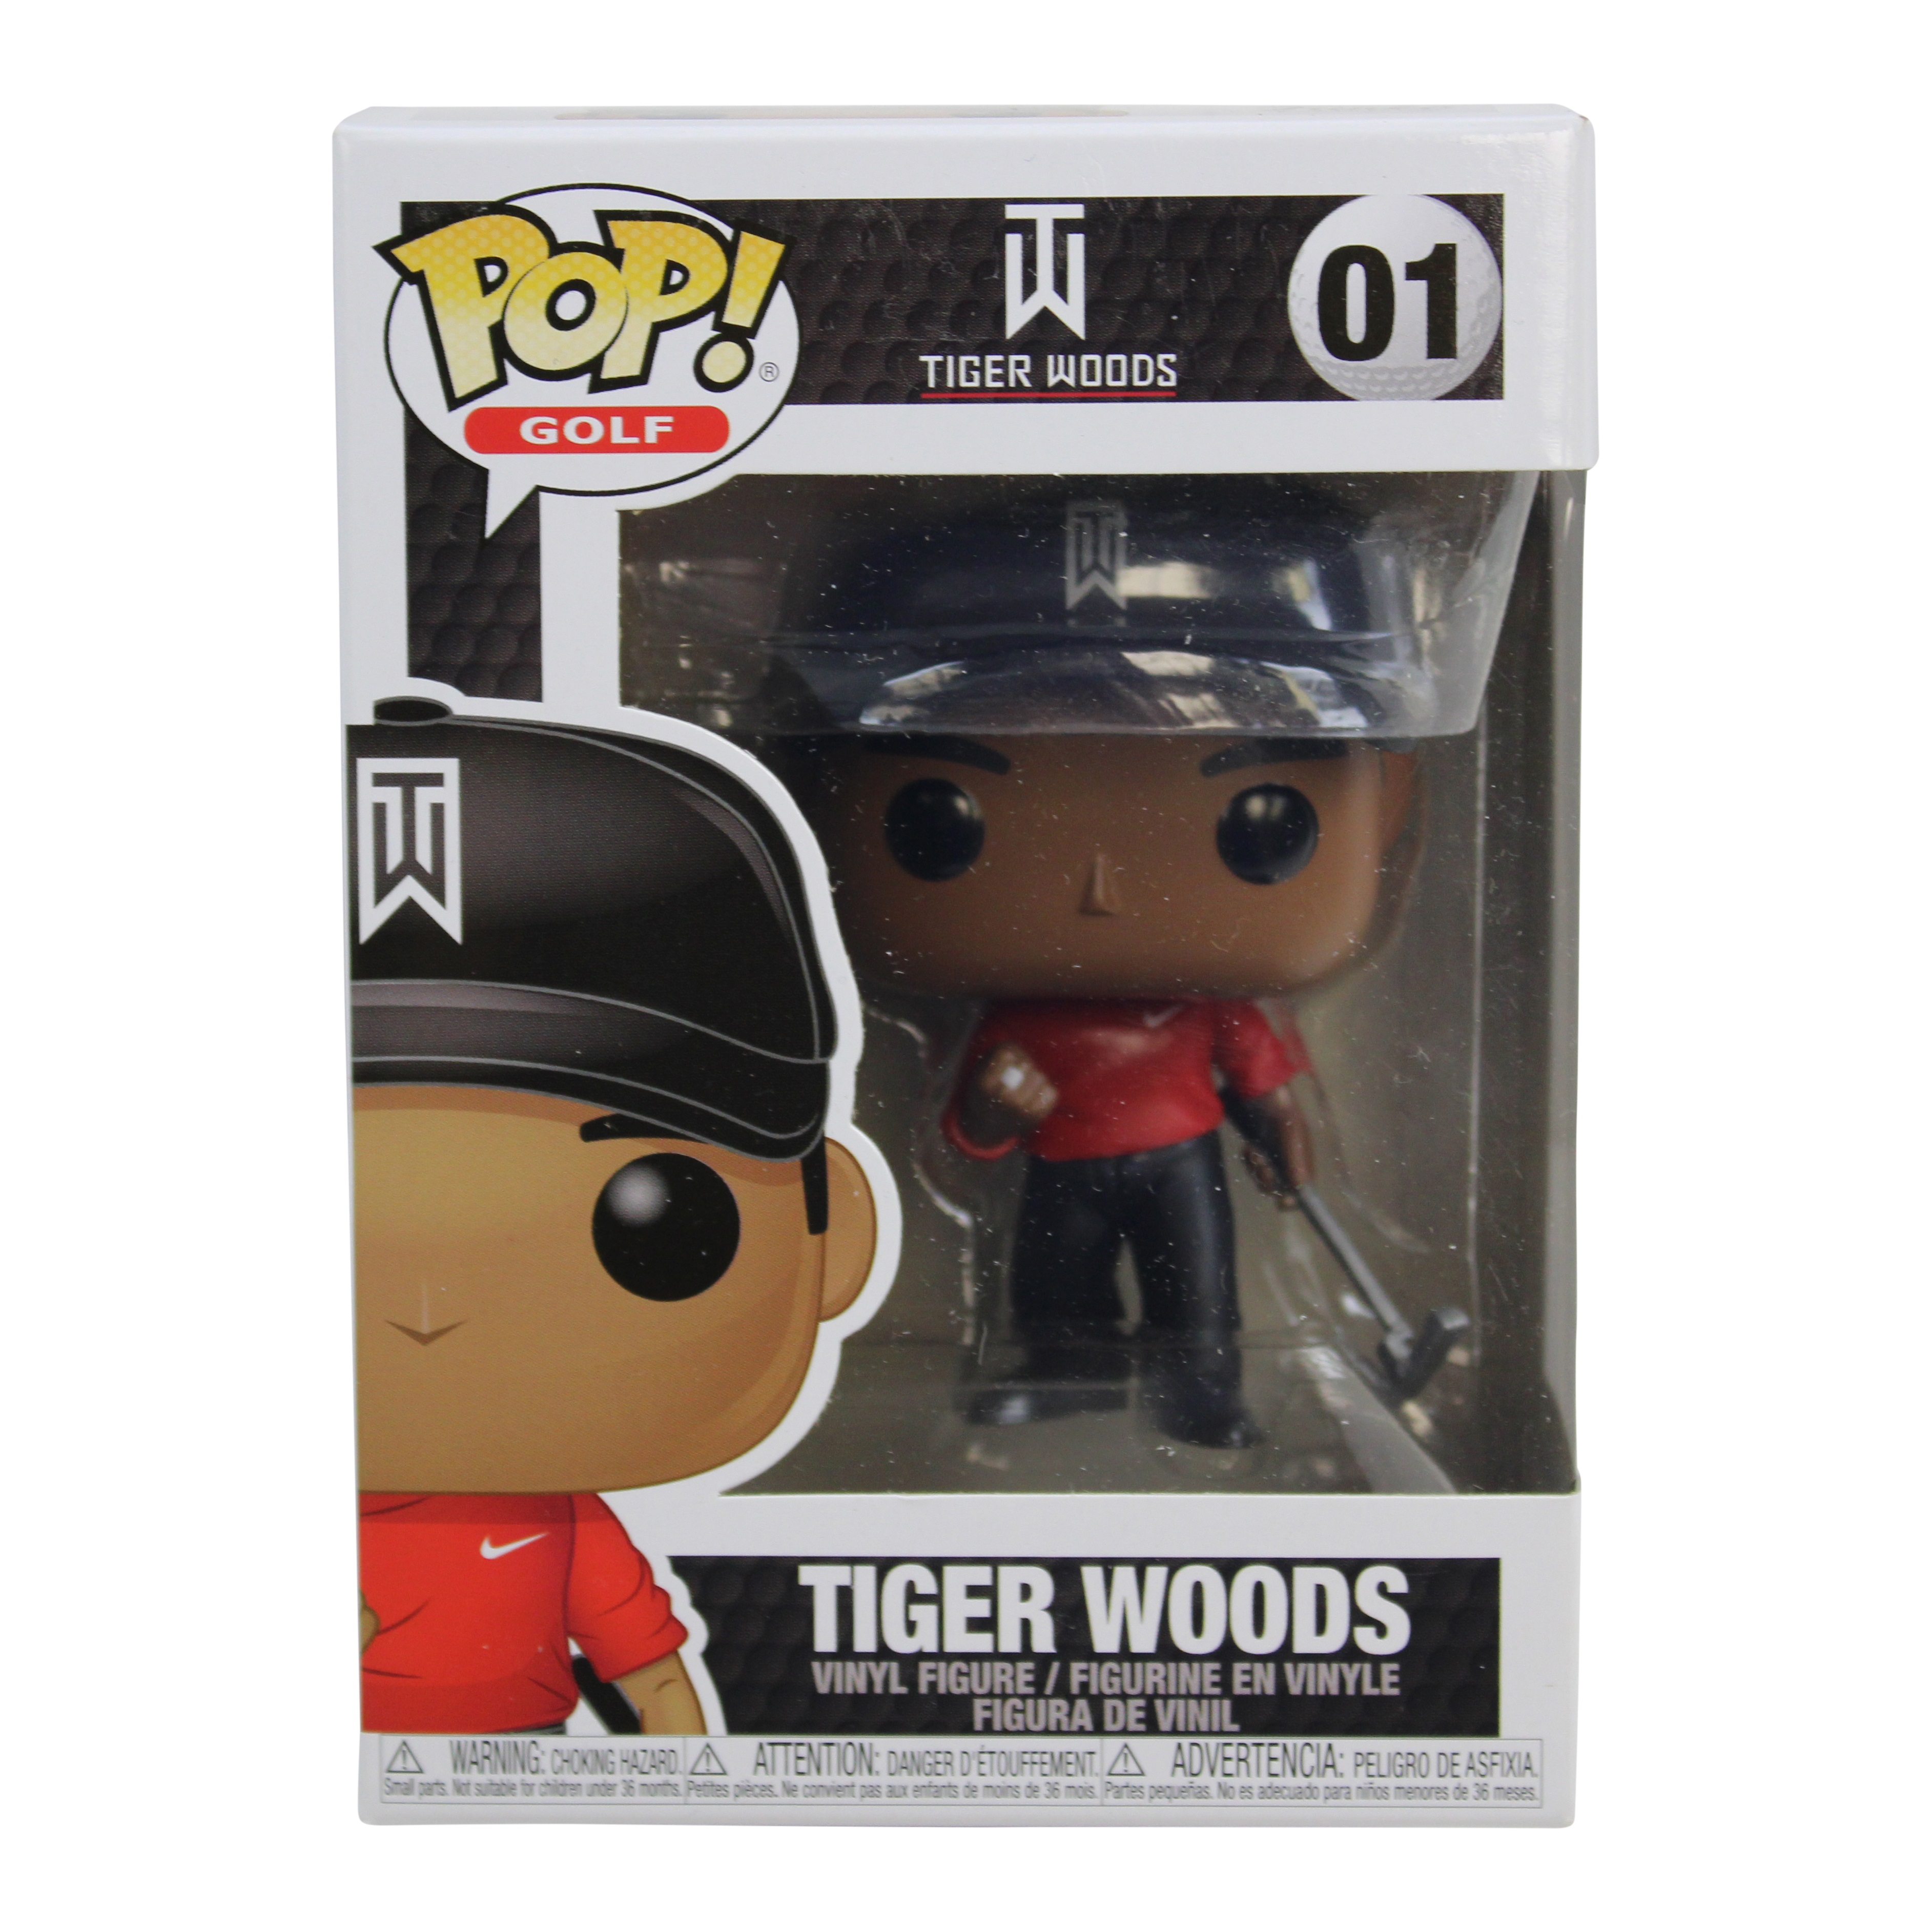 Lot Detail - Tiger Woods 'Pop! Golf' Funko Pop #01 in Original Unopened Box